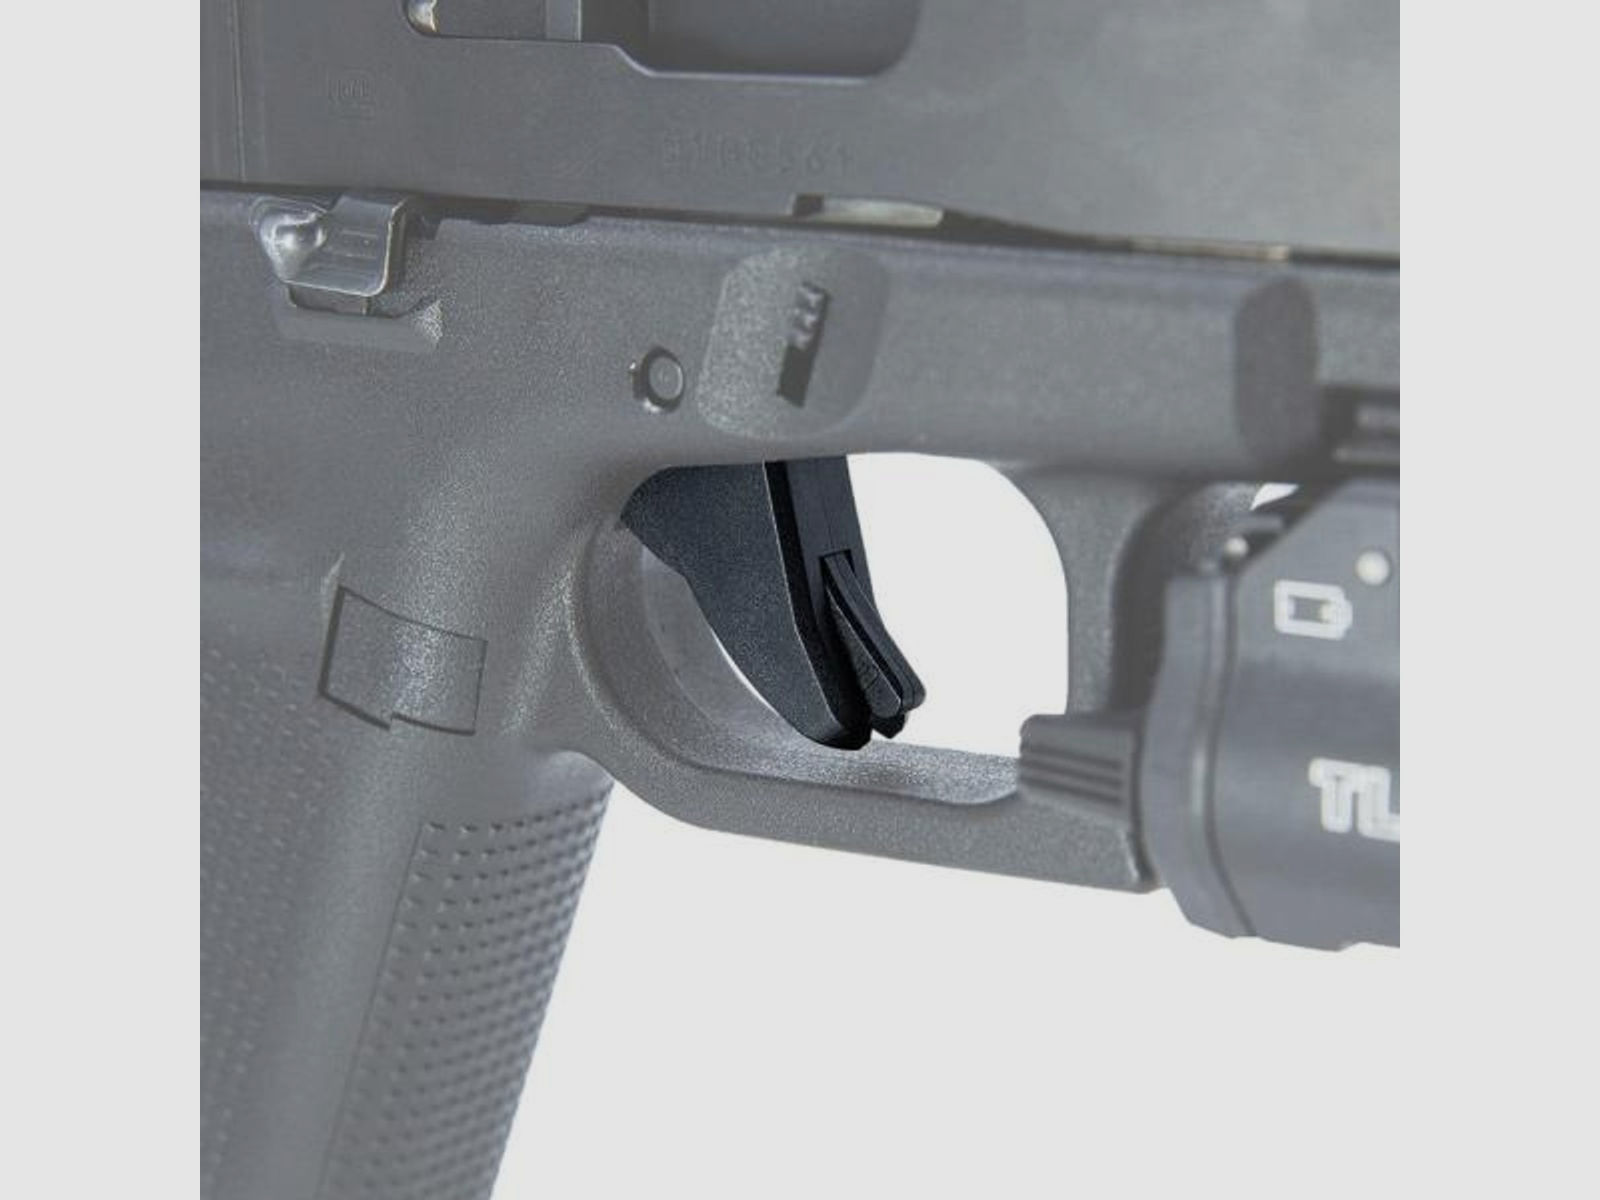 GLOCK Tuning/Ersatzteil f. Pistole Abzug Performance Trigger f. 9mmLuger Gen4&5, ca. 2000g